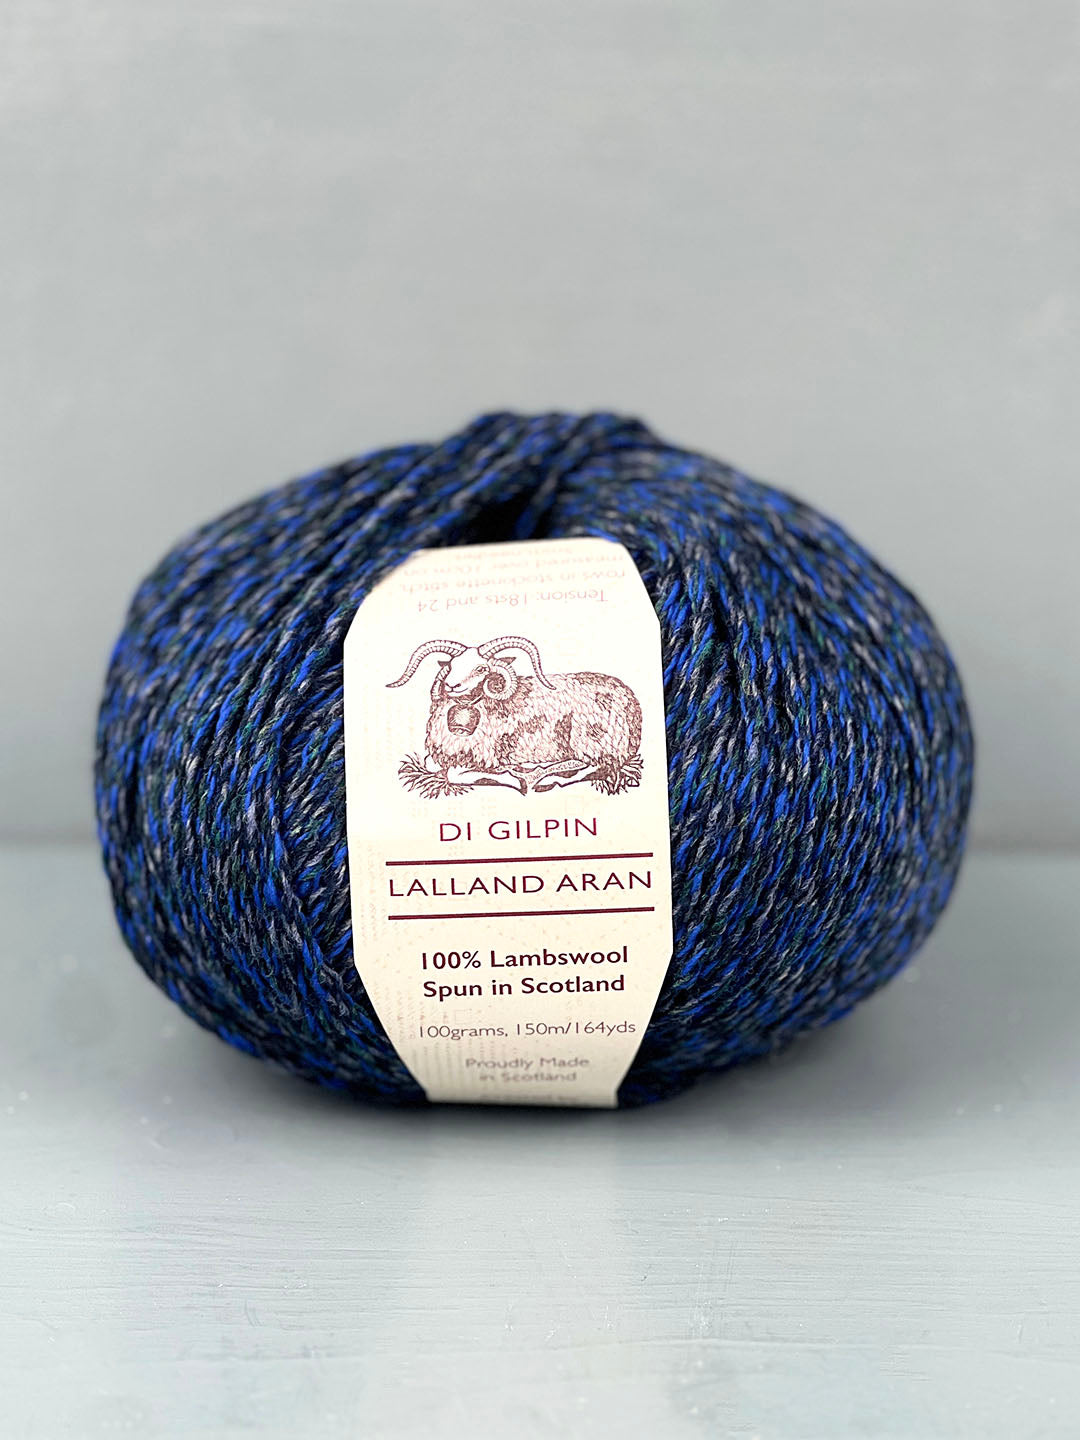 Di Gilpin aran weight yarn in blue and grey Corryvreckan colourway. Scottish Textiles Showcase